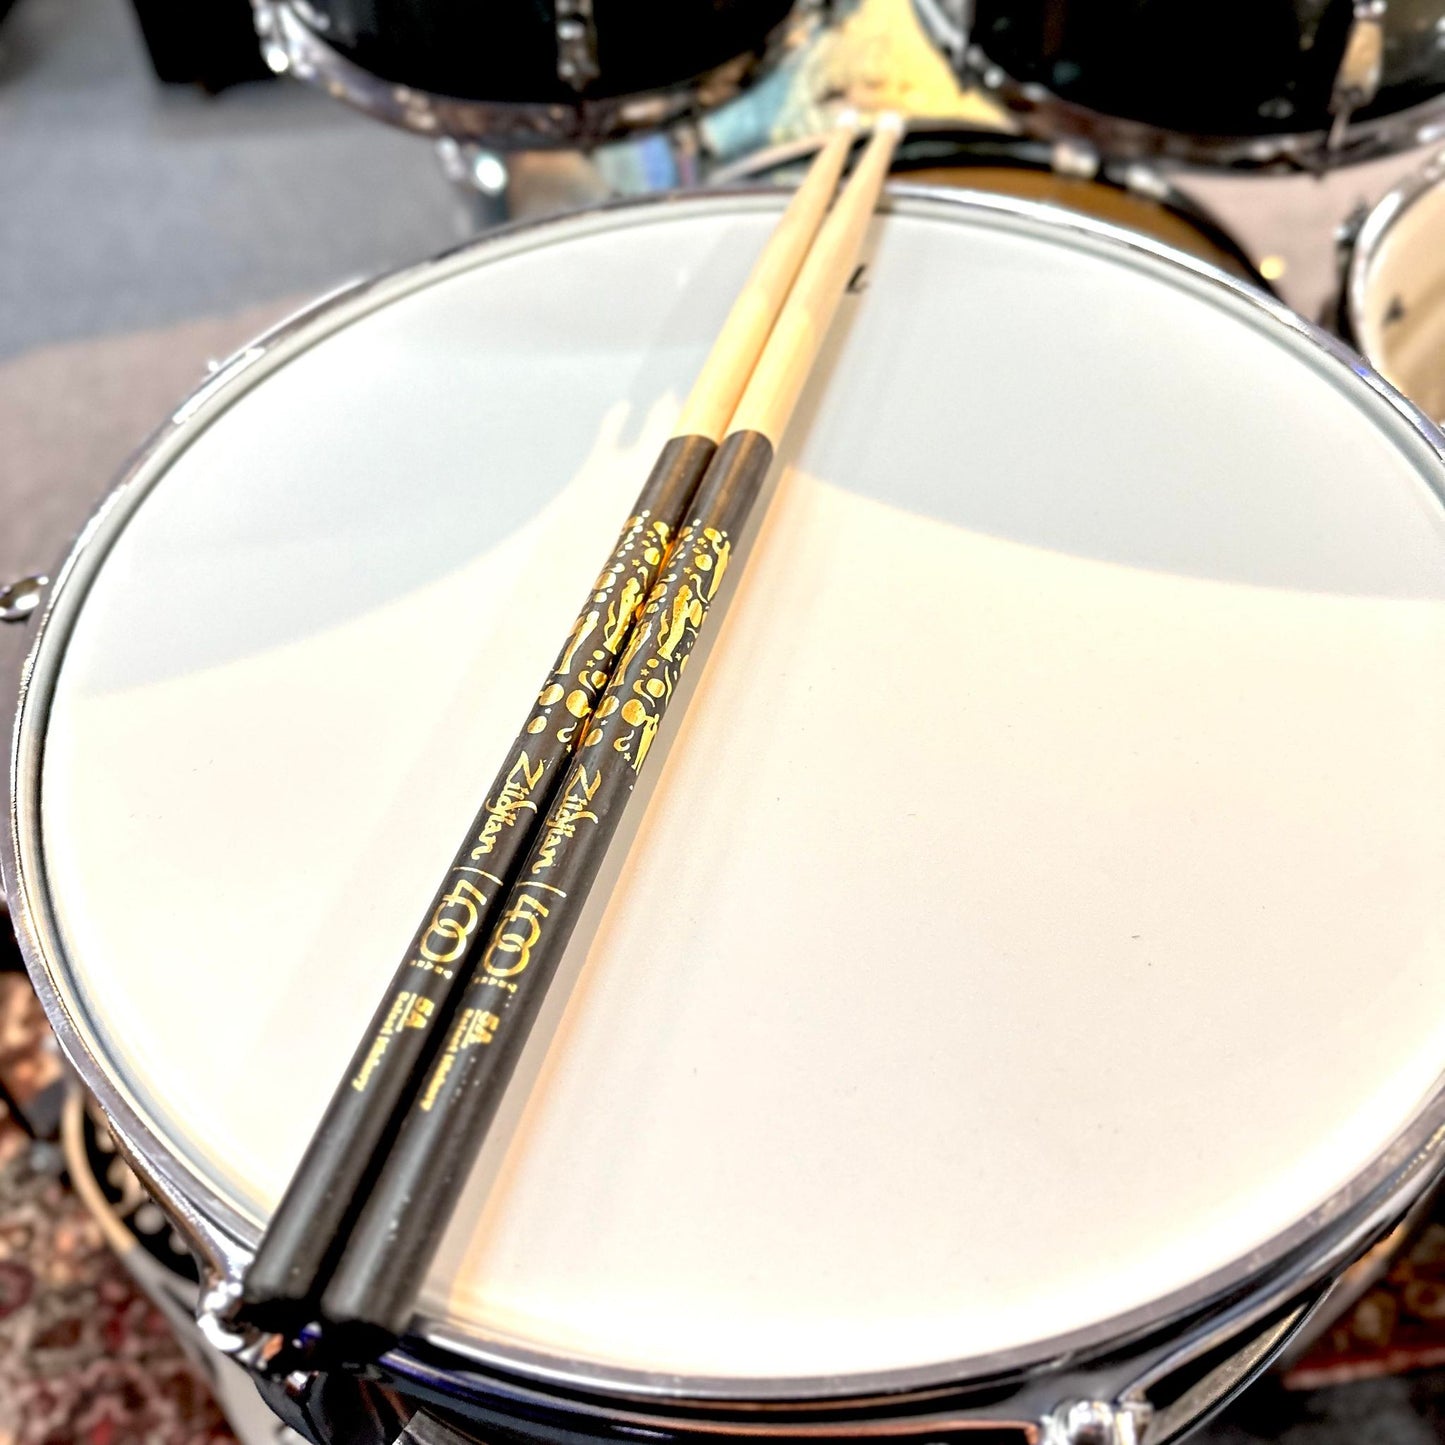 Zildjian Limited Edition 400th Anniversary 5A Drumsticks